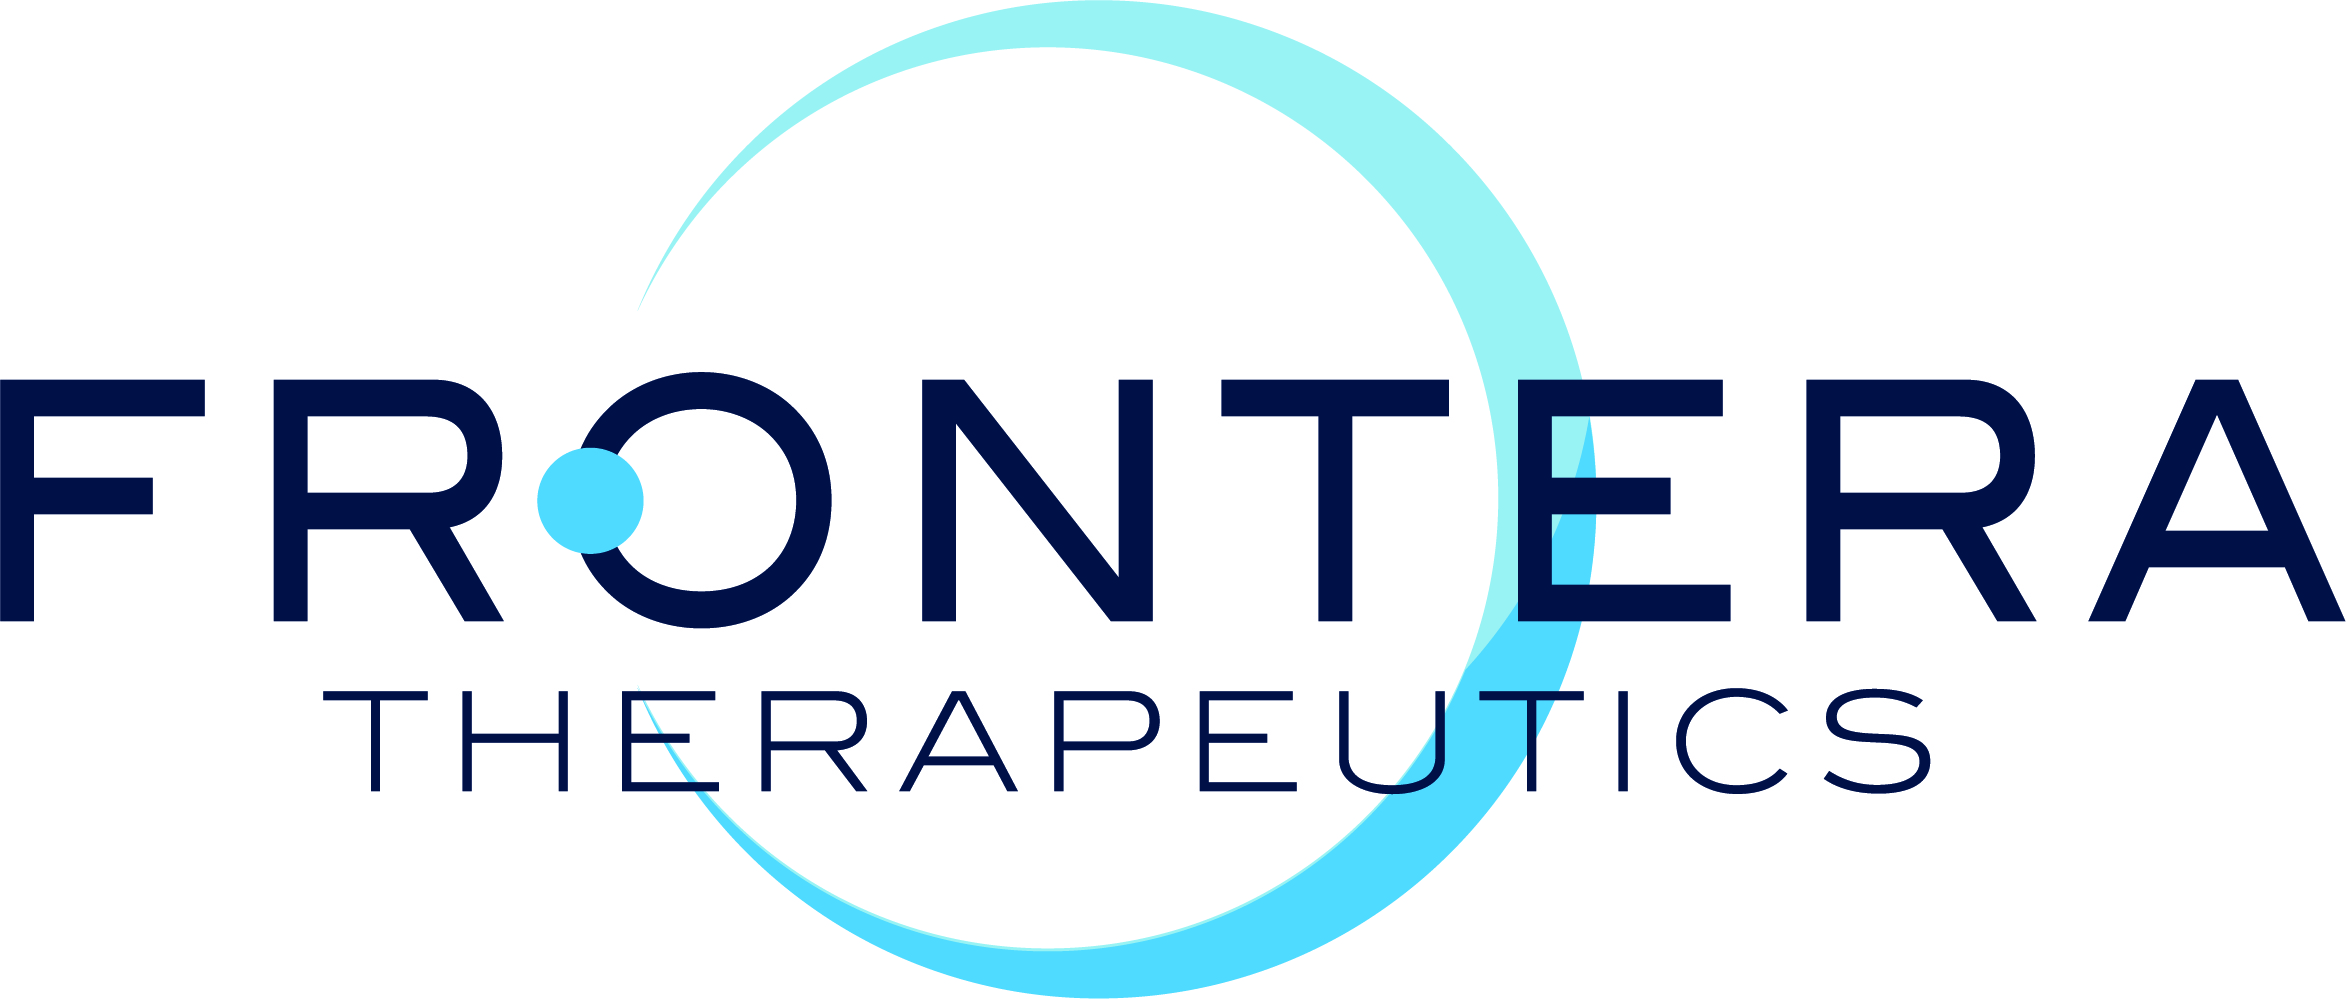 FronteraTherapeutics_Logo_300dpi.jpg